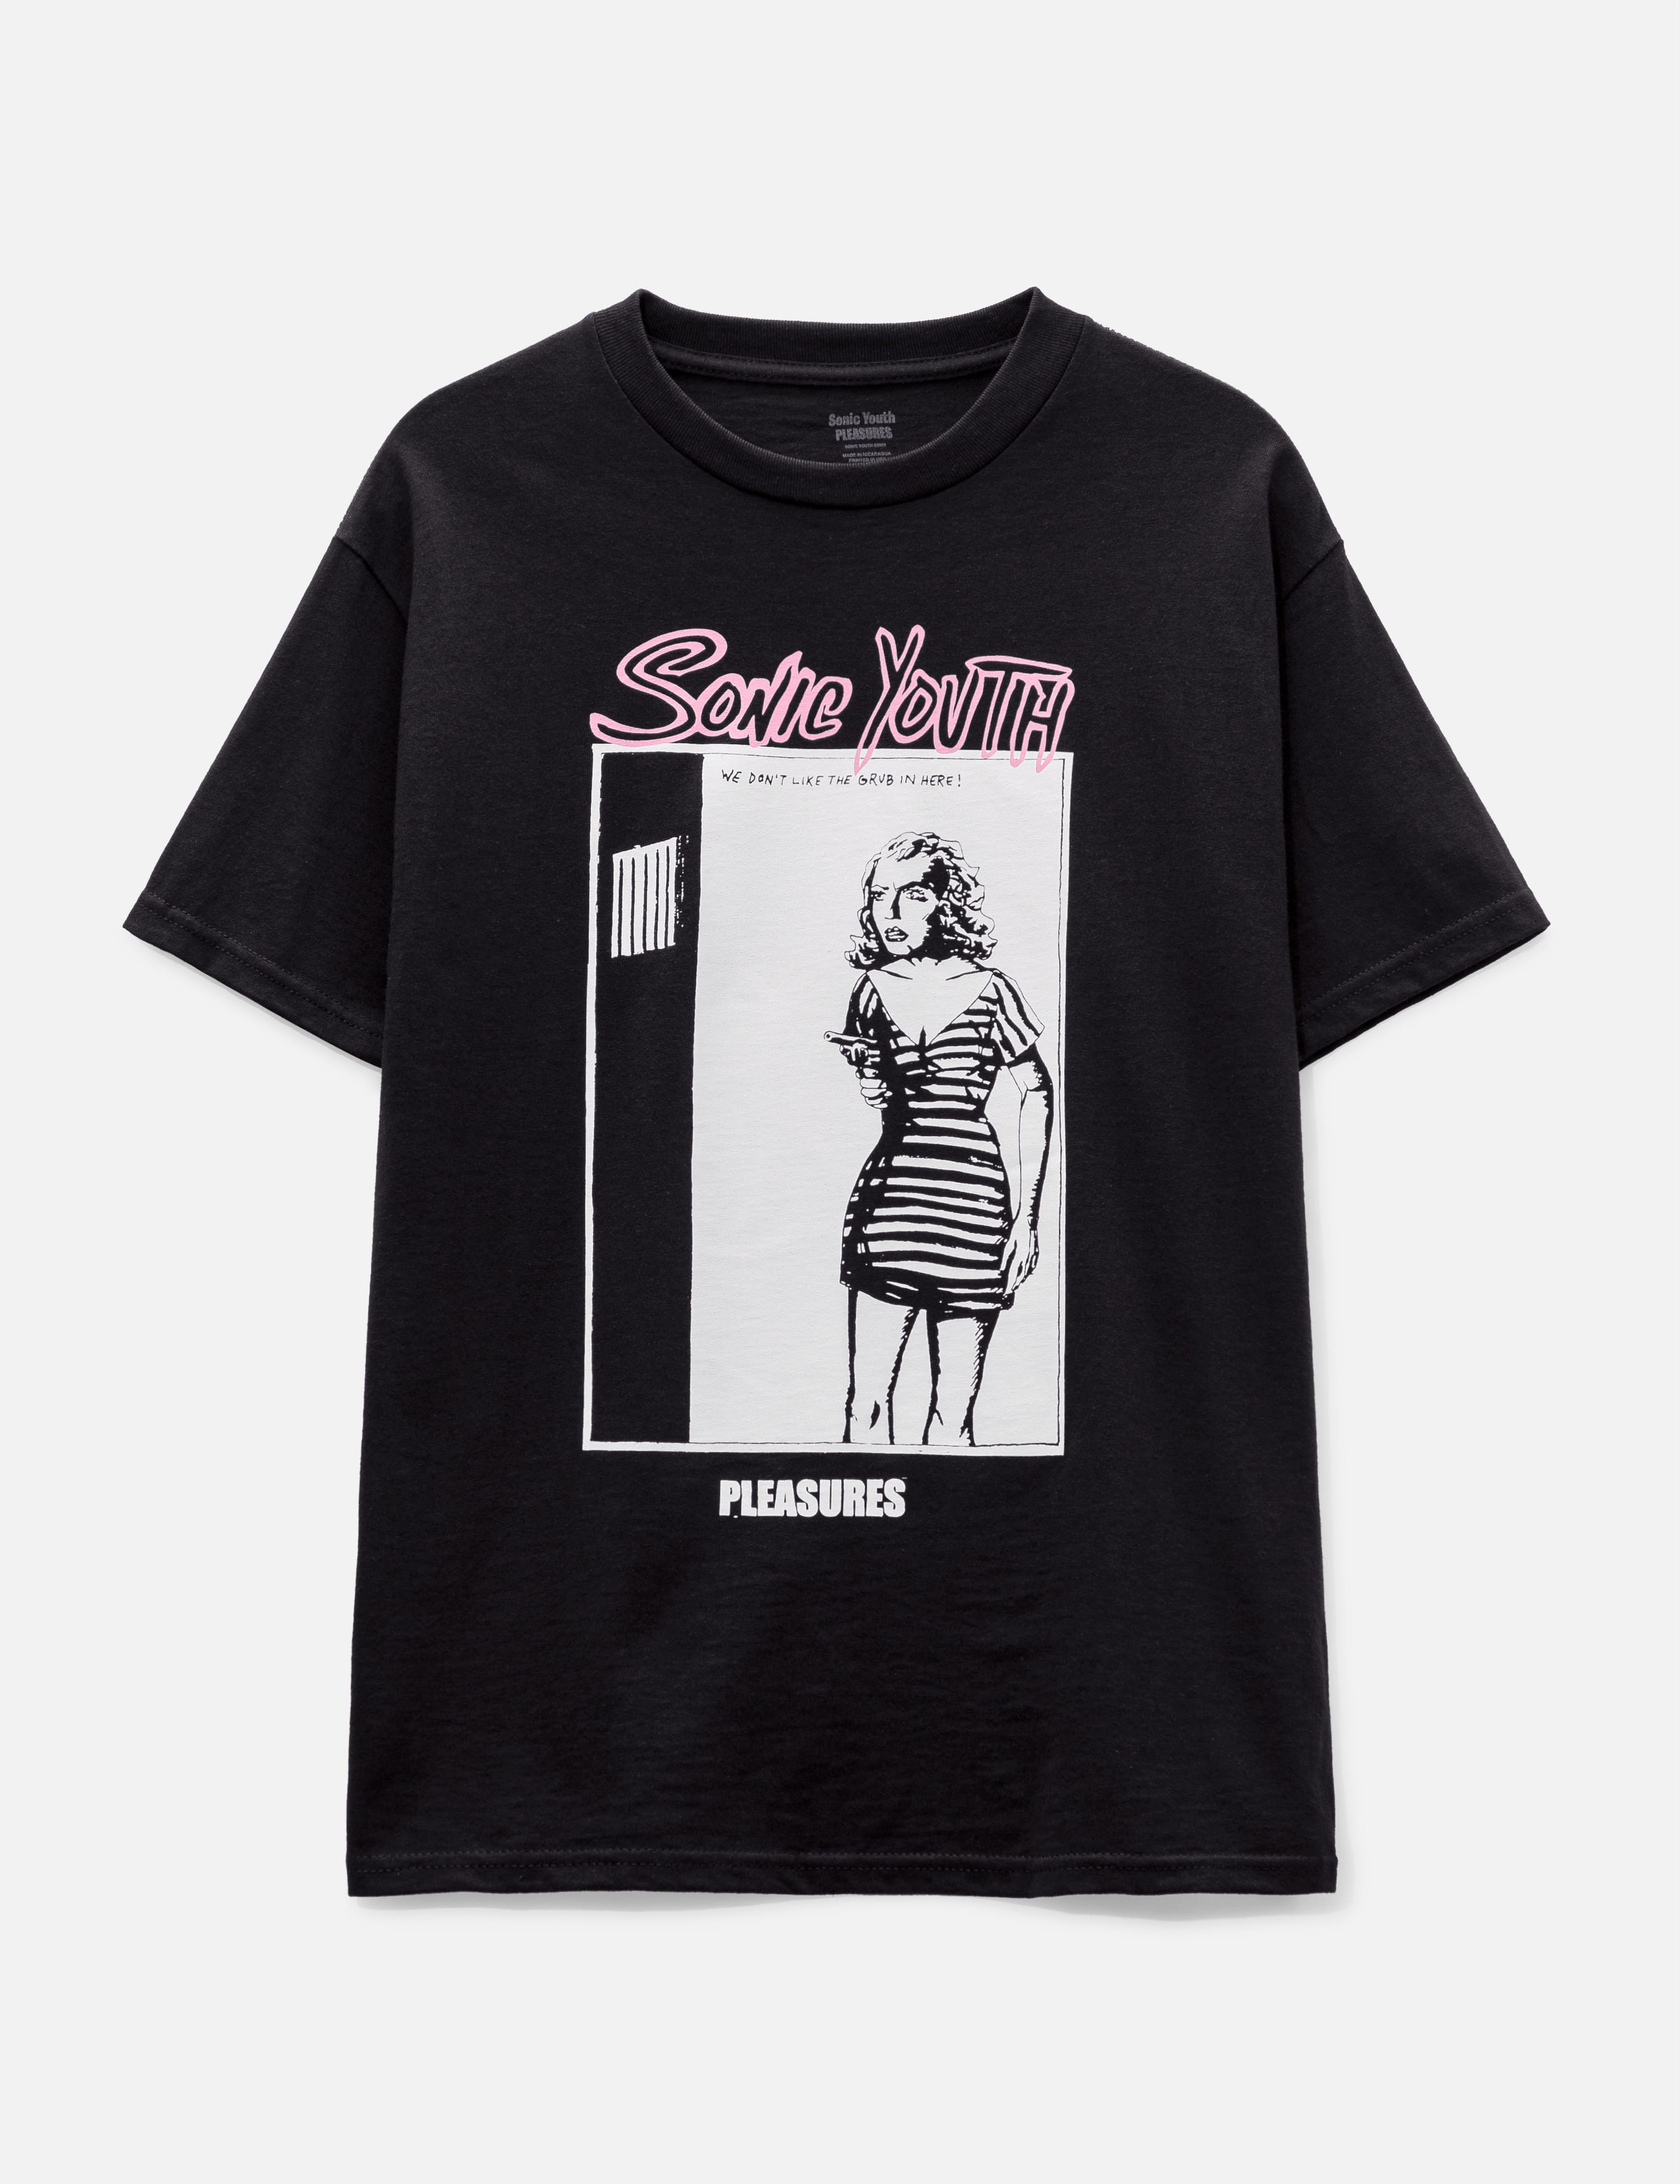 Pleasures - PLEASURES x Sonic Youth Grub T-shirt | HBX - Globally